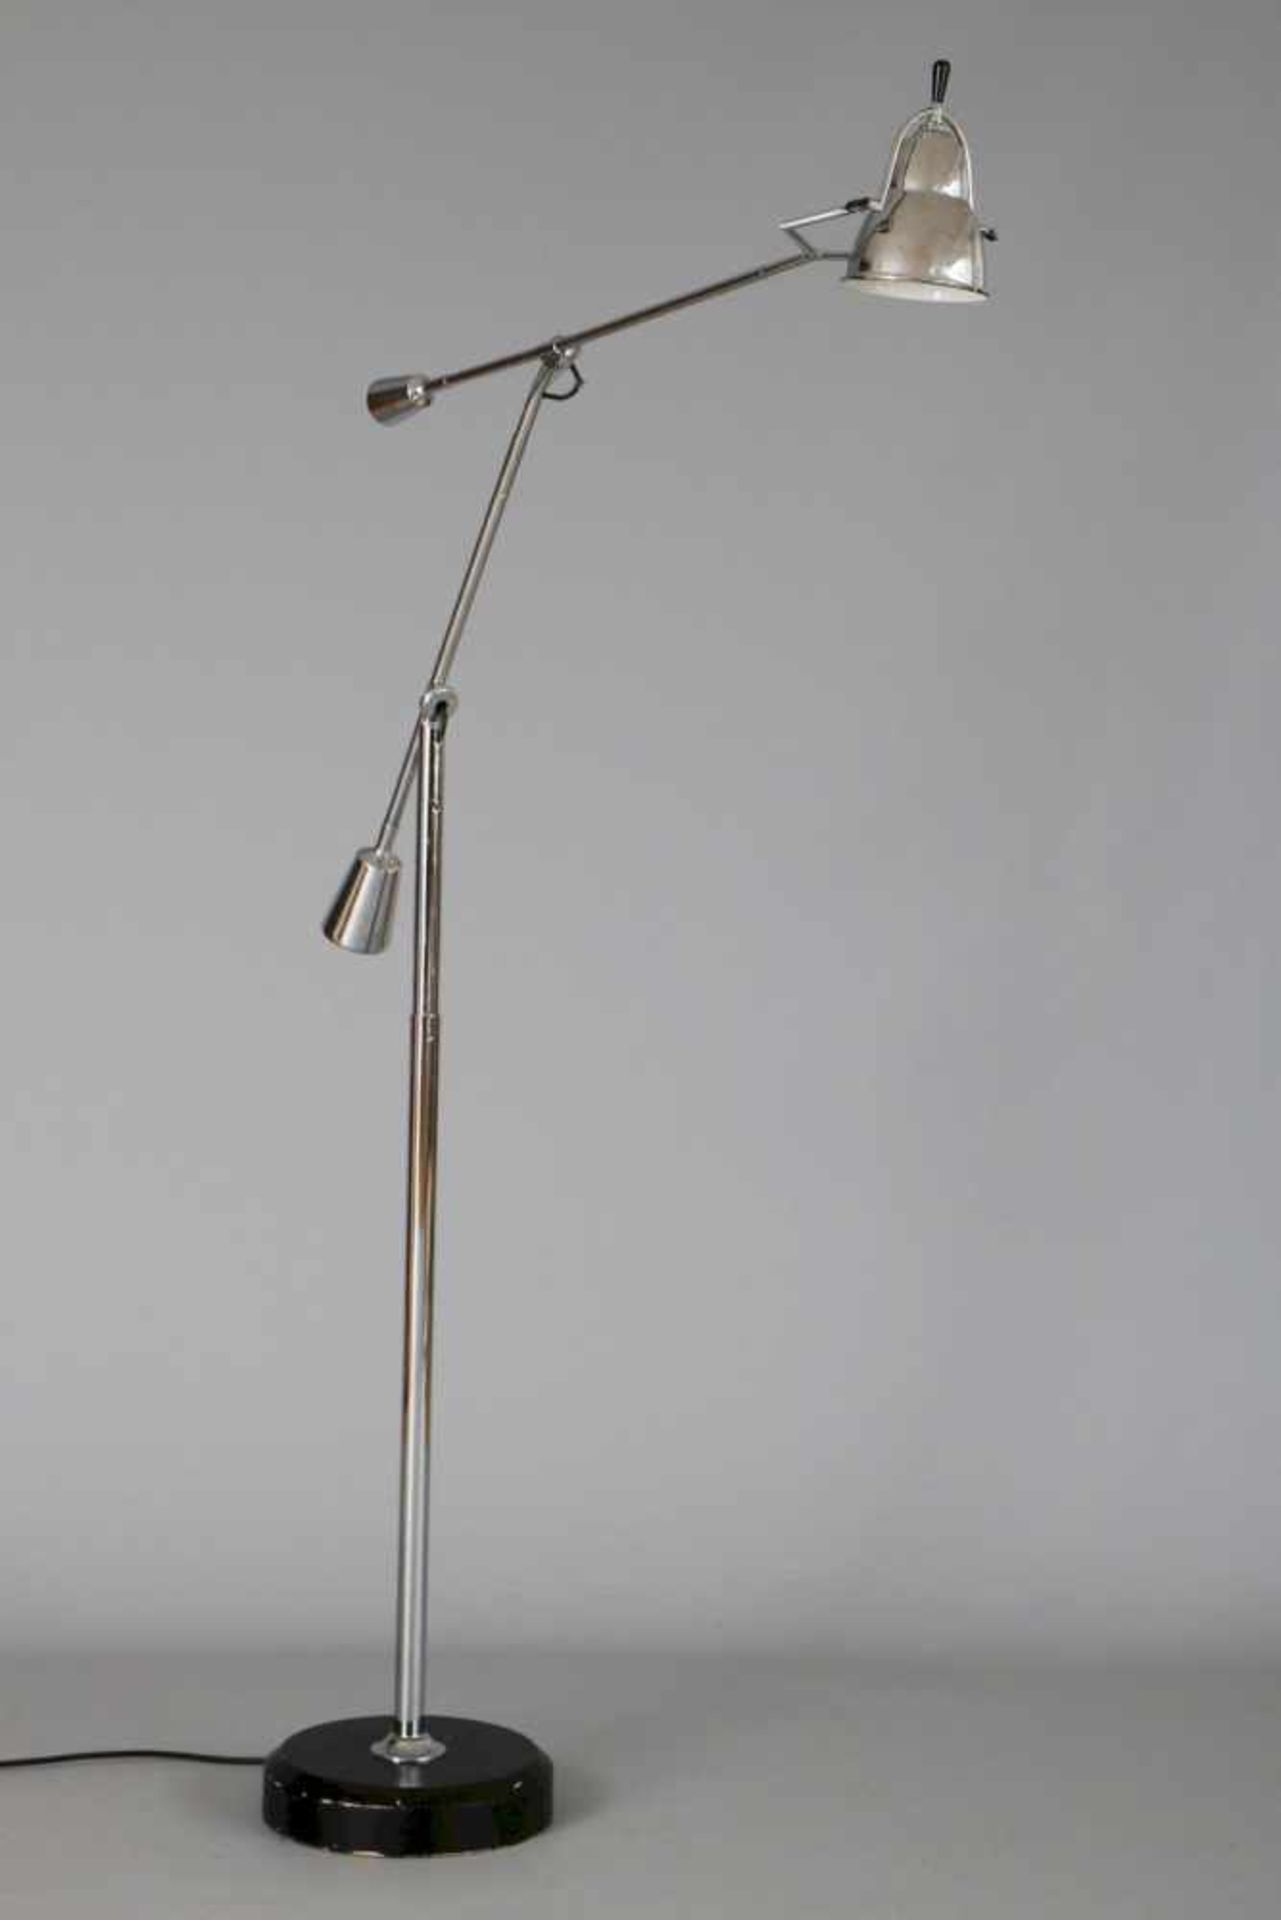 Stehlampe im Stile Eduard-Wilfrid Buquetverchromtes Metall, trichterförmiger Kuppelschirm an